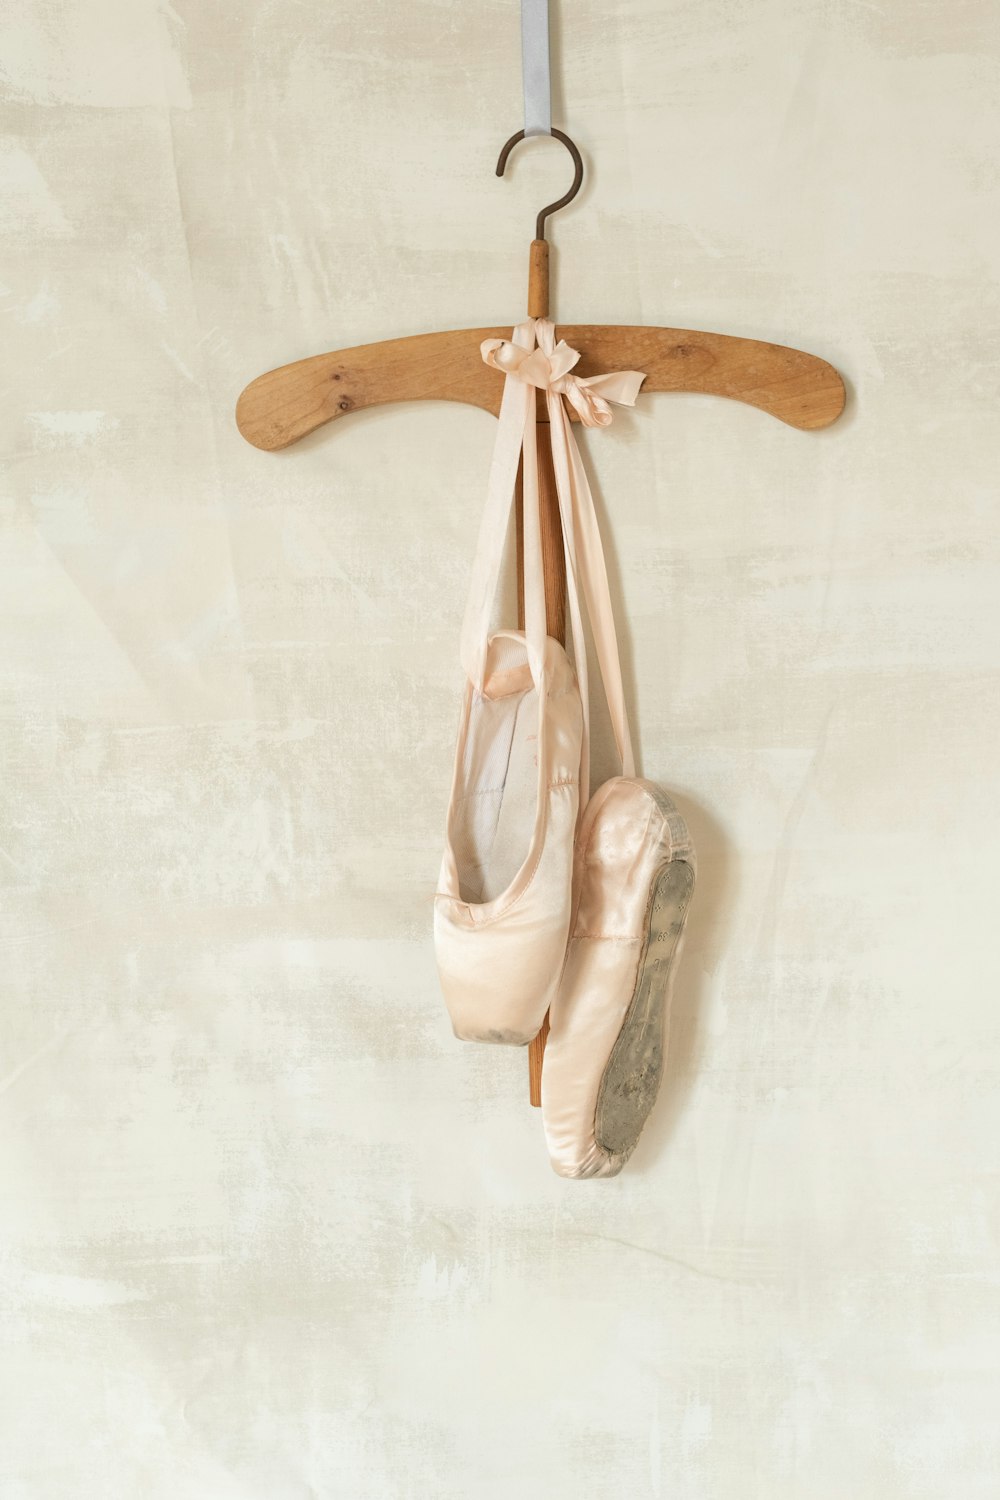 Ballet Shoes Pictures | Download Free Images on Unsplash